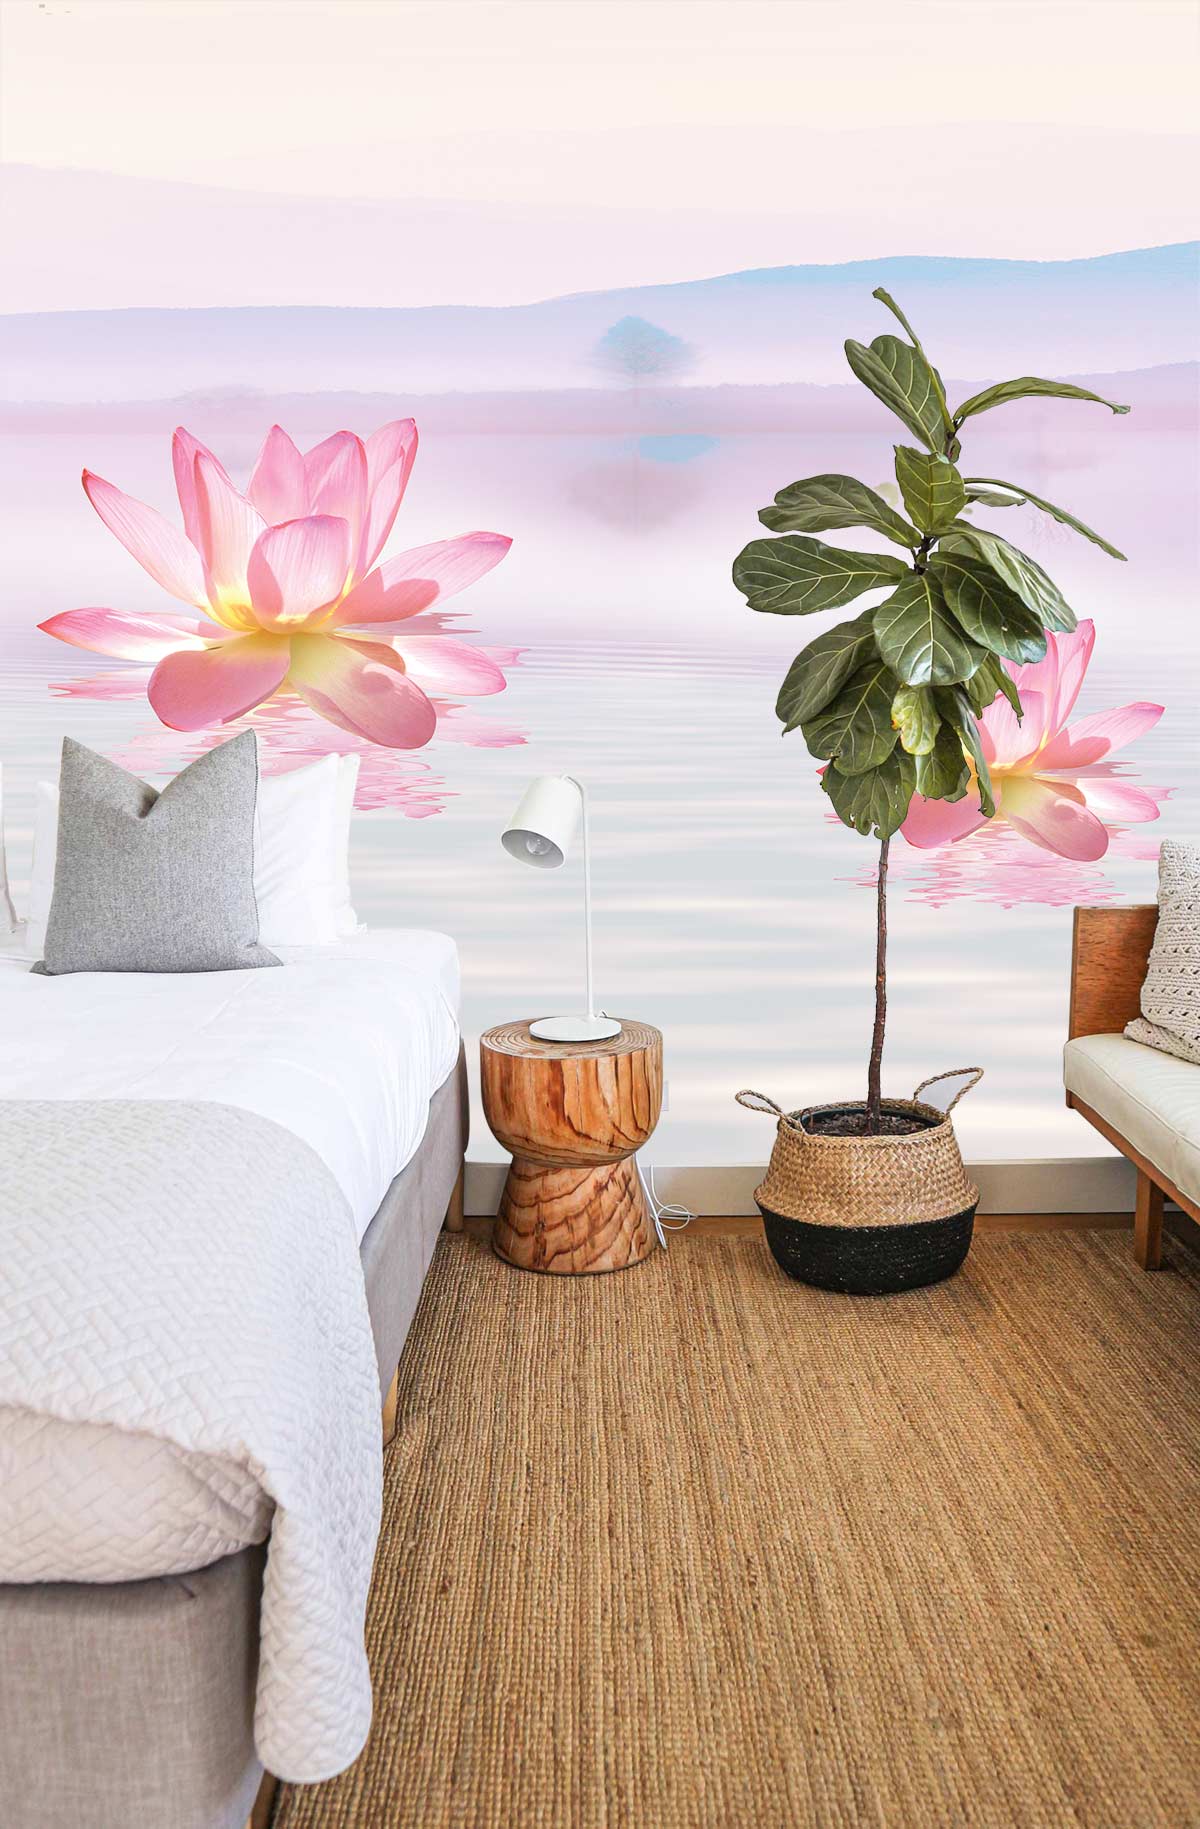 Floating Lotus Flower Wallpaper Design